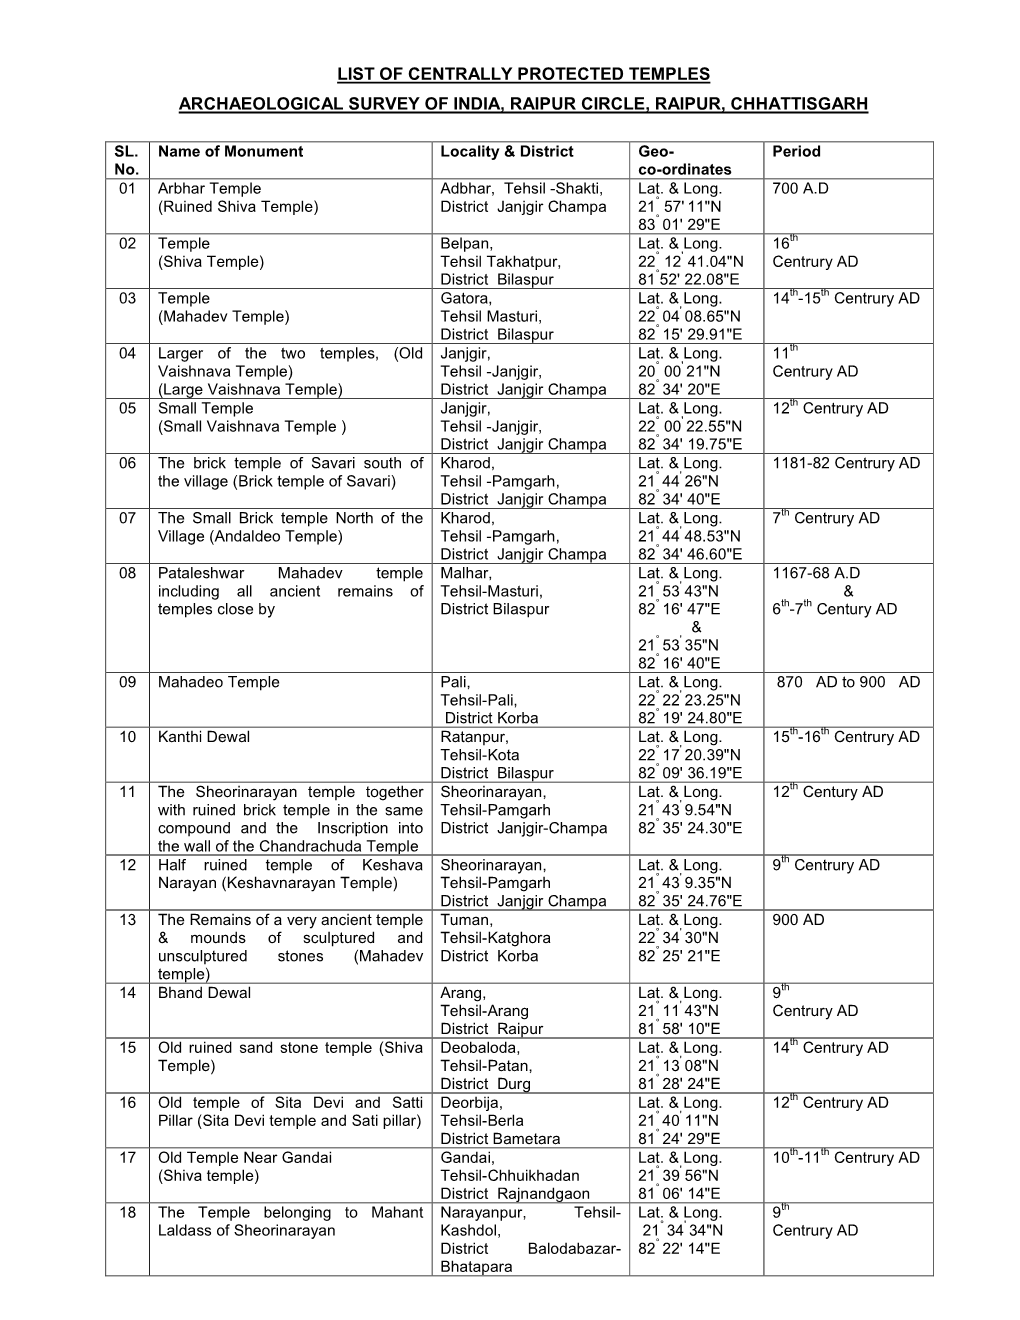 List of Centrally Protected Temples Archaeological Survey of India, Raipur Circle, Raipur, Chhattisgarh